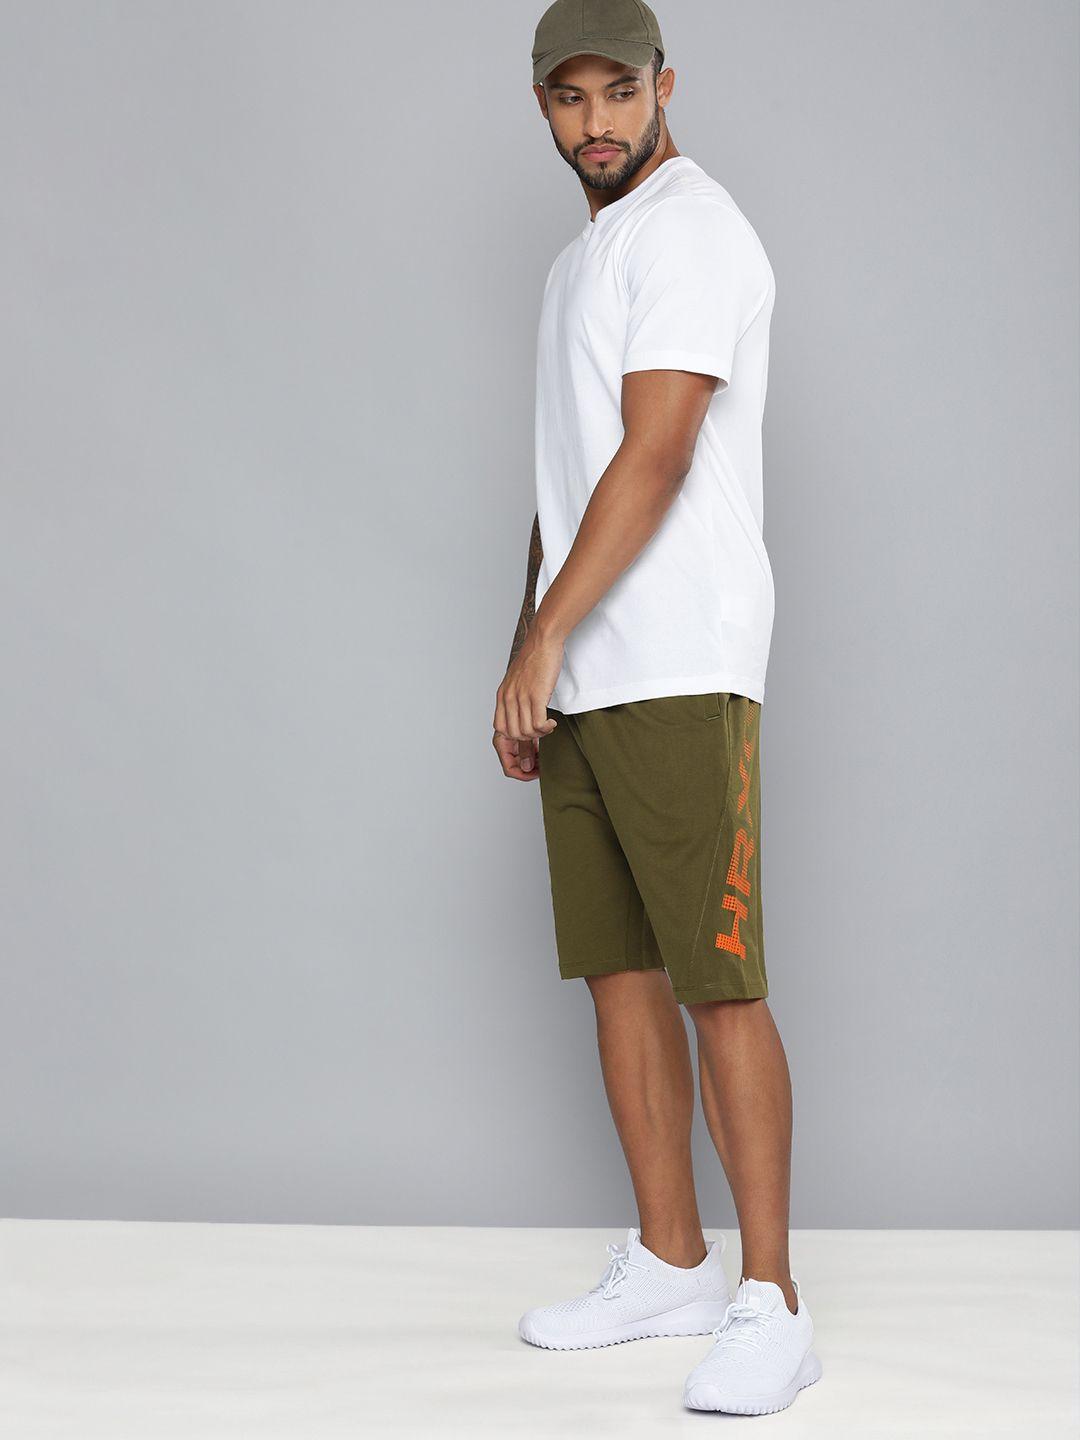 hrx by hrithik roshan men olive green & orange pure cotton typography printed shorts